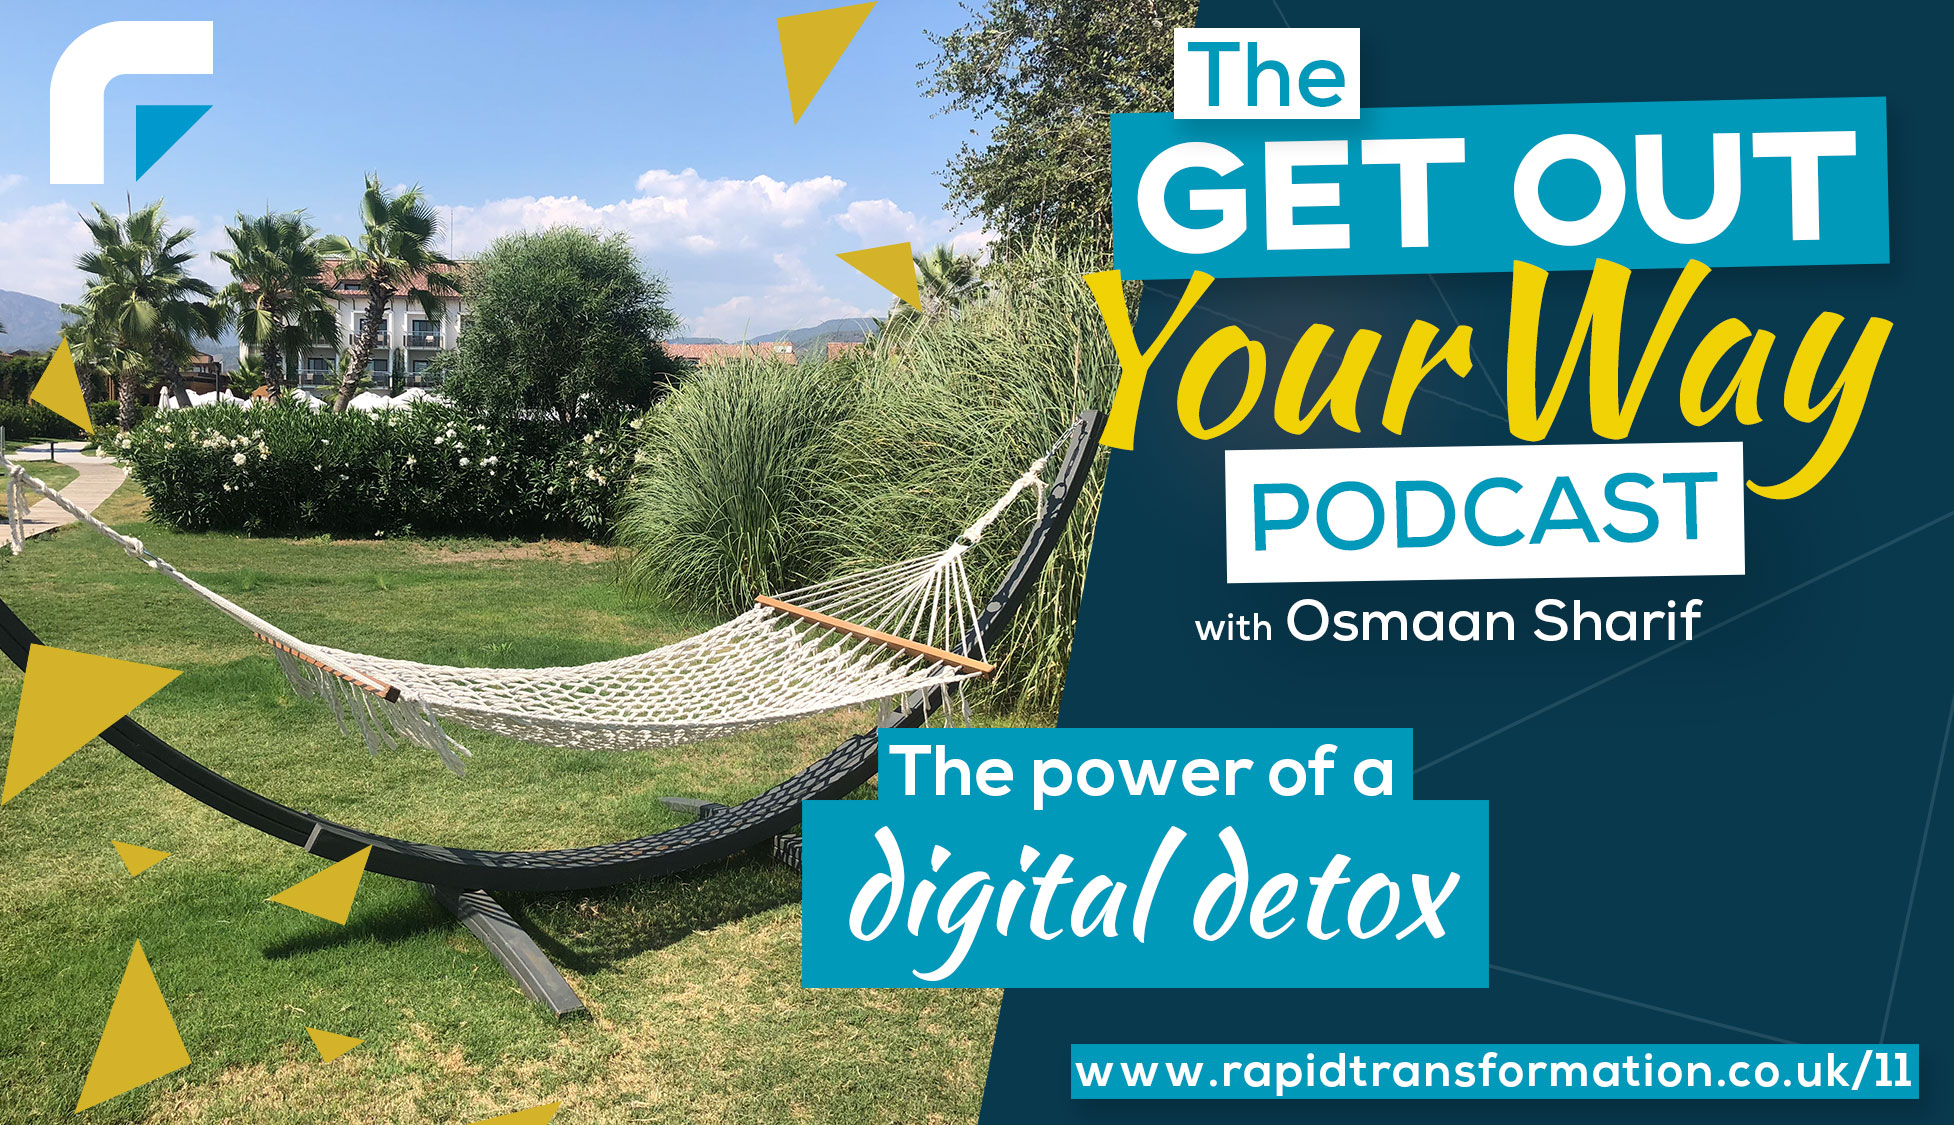 The power of a digital detox